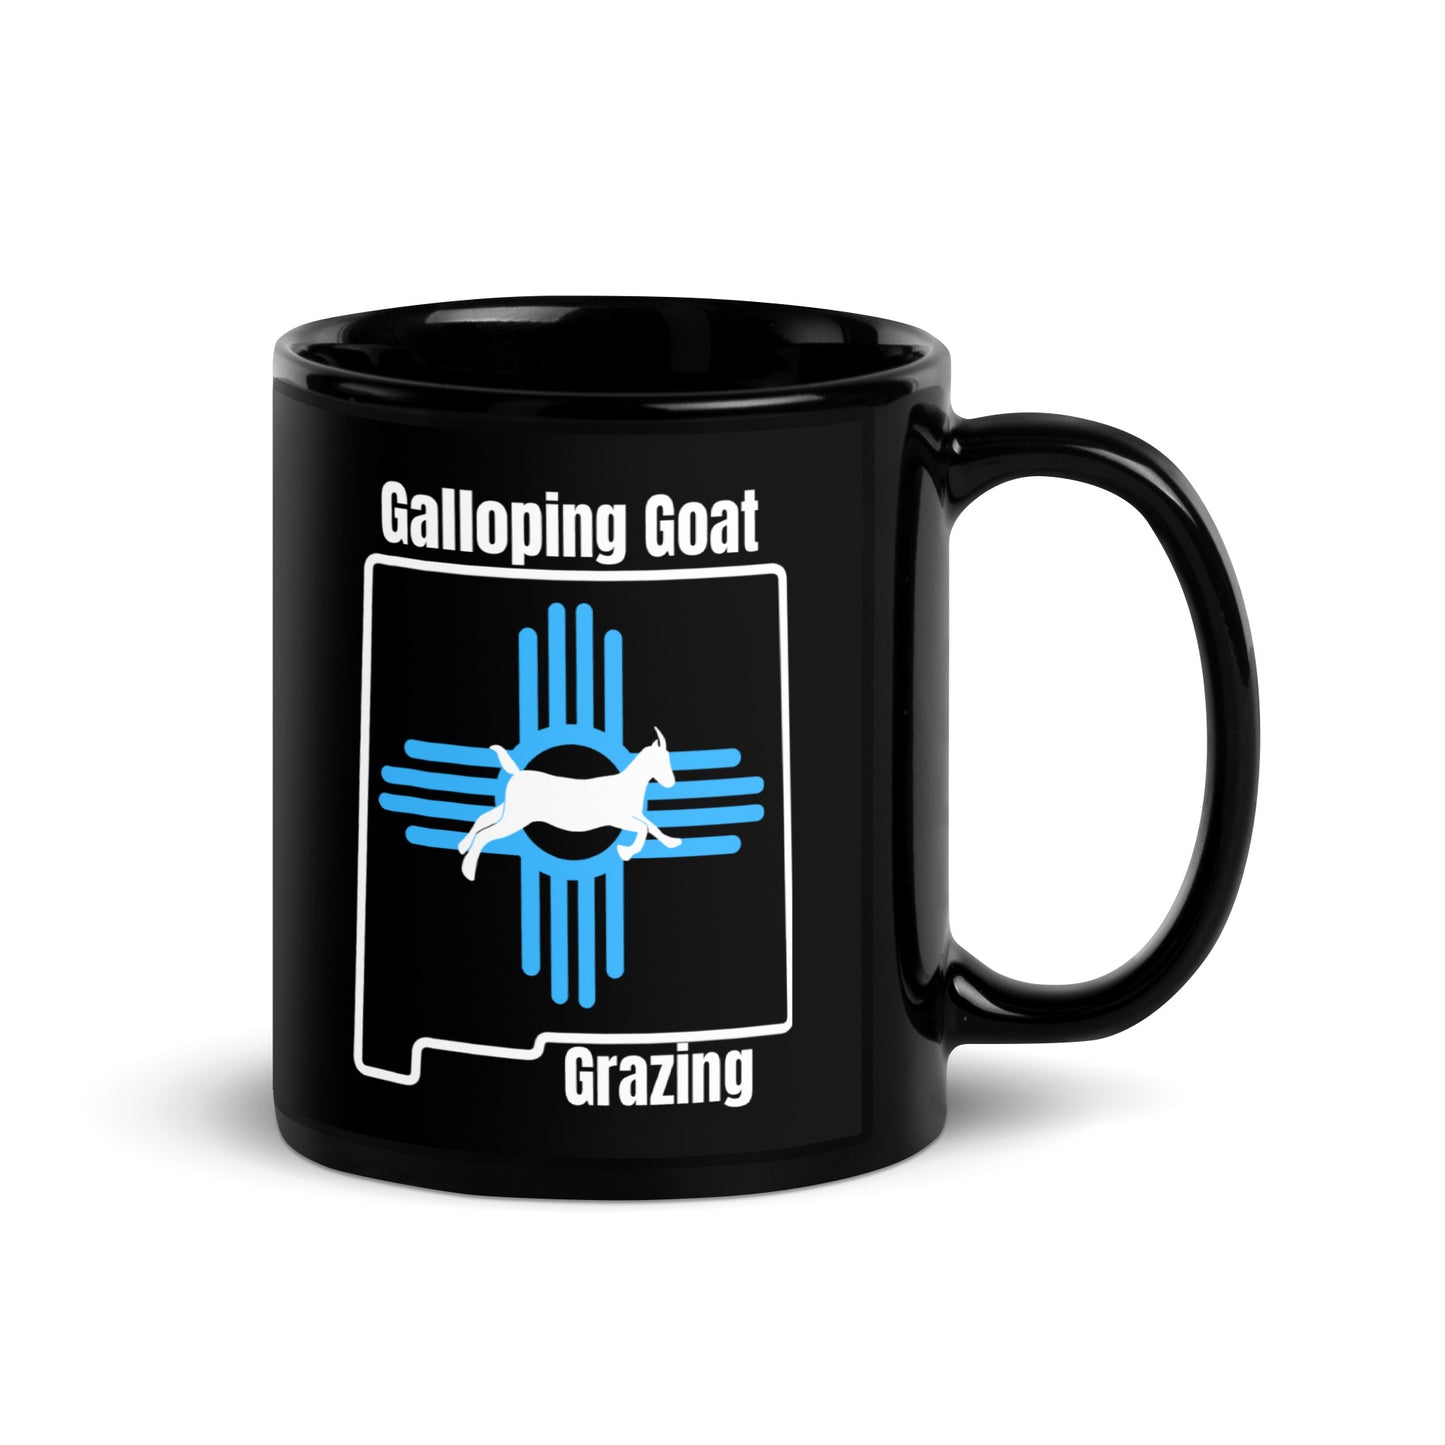 Galloping Goat Grazing: NM: Black Glossy Mug